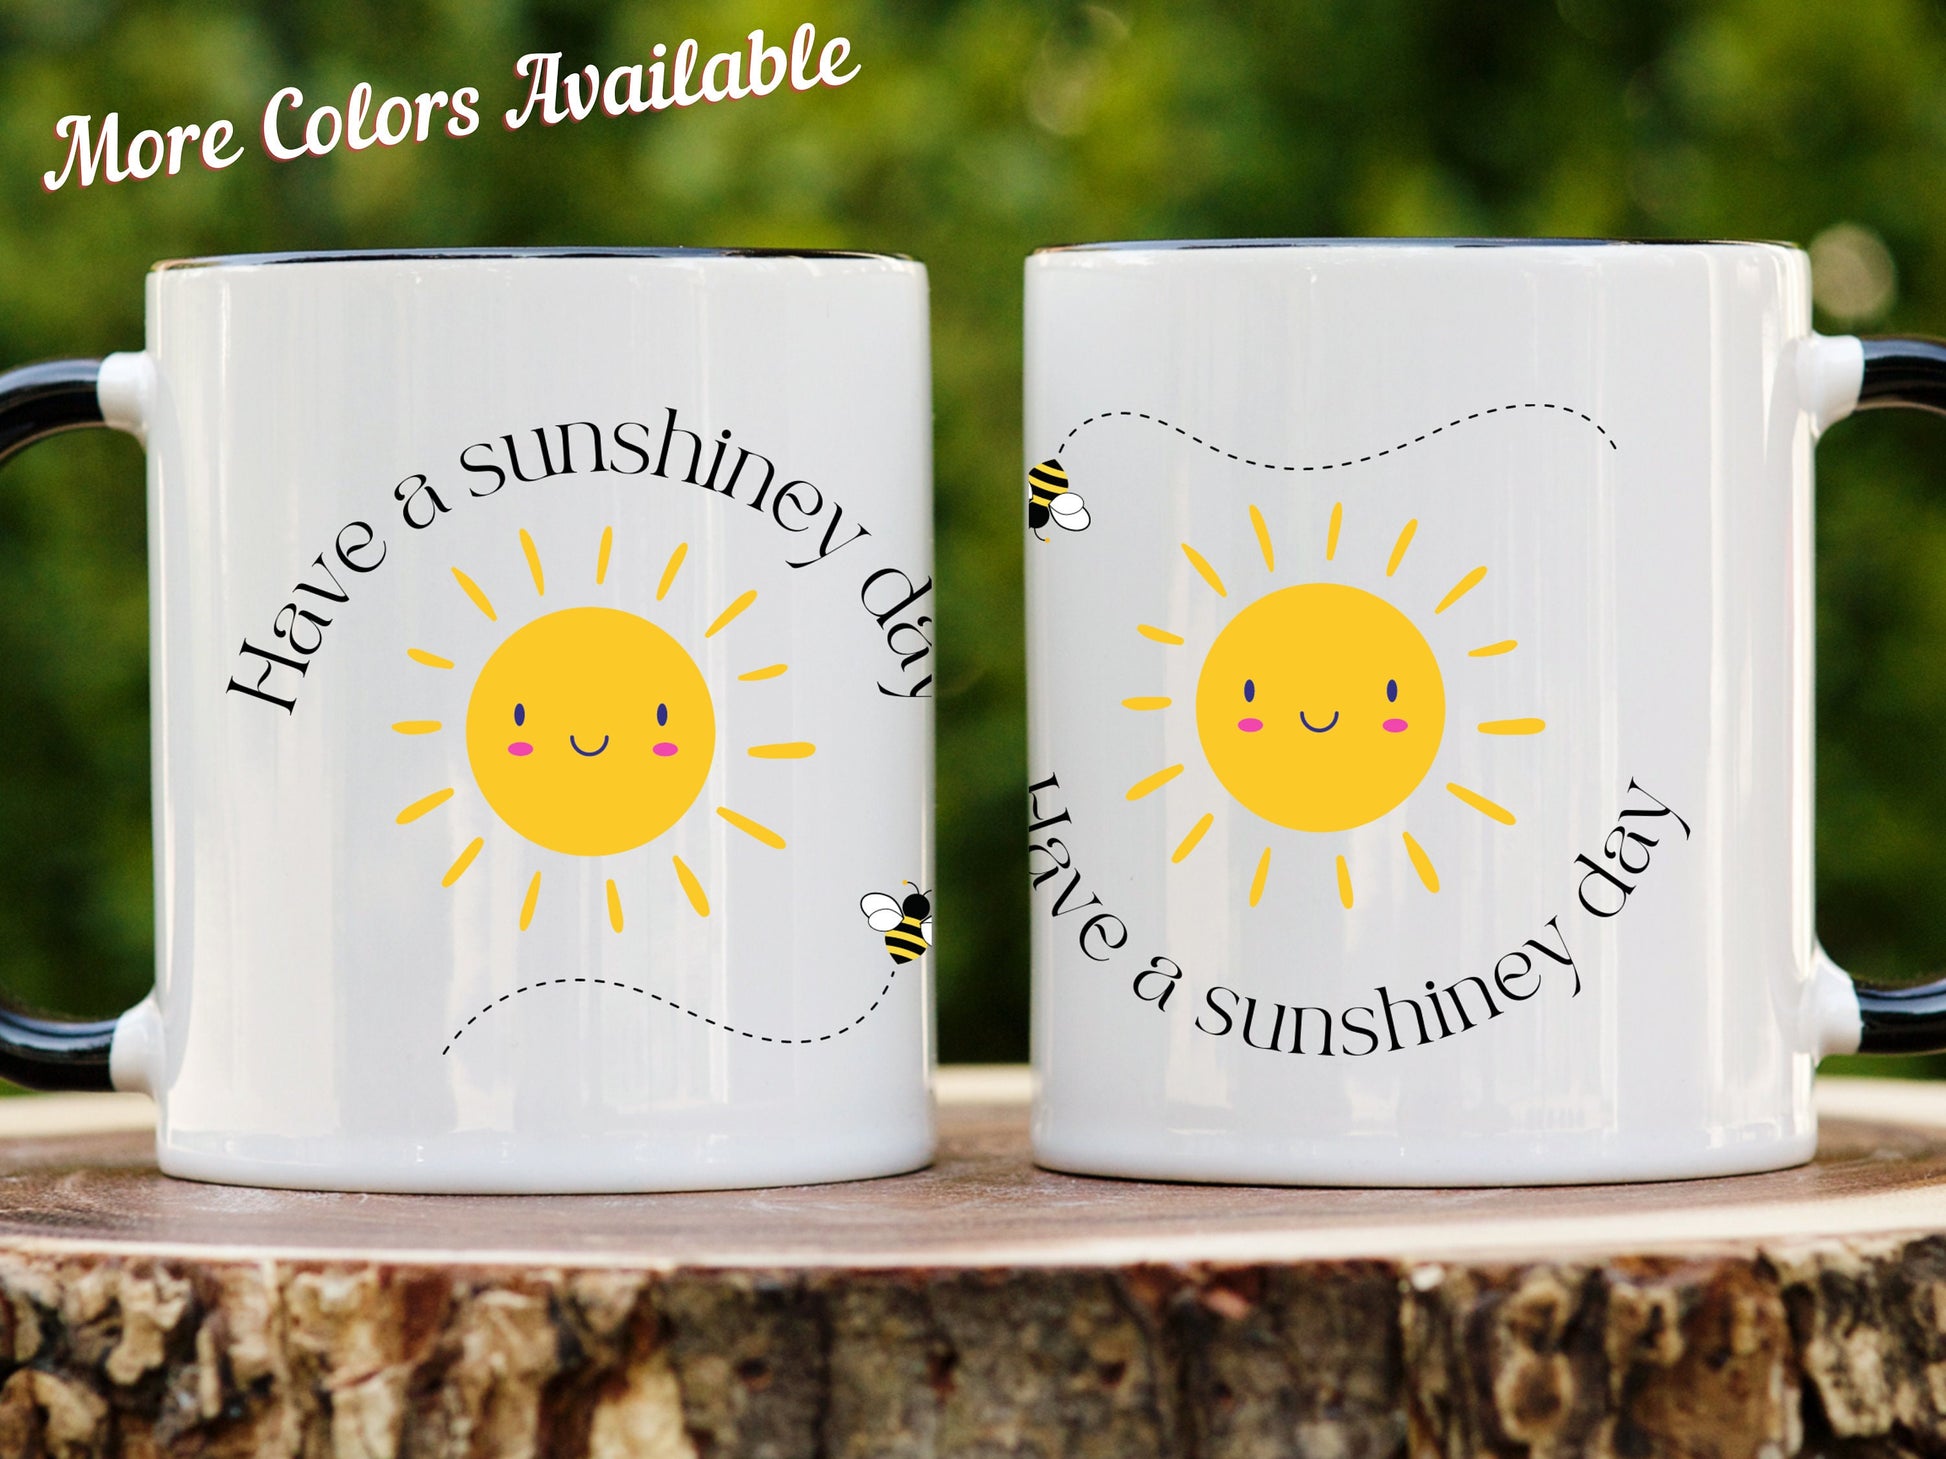 Sunshiney Day Mug, Funny Coffee Tea Cup, Birthday Gift for Dad Mom, Gift for Her Him or Friend, Cute Christmas Ceramic Mug, 015 Zehnaria